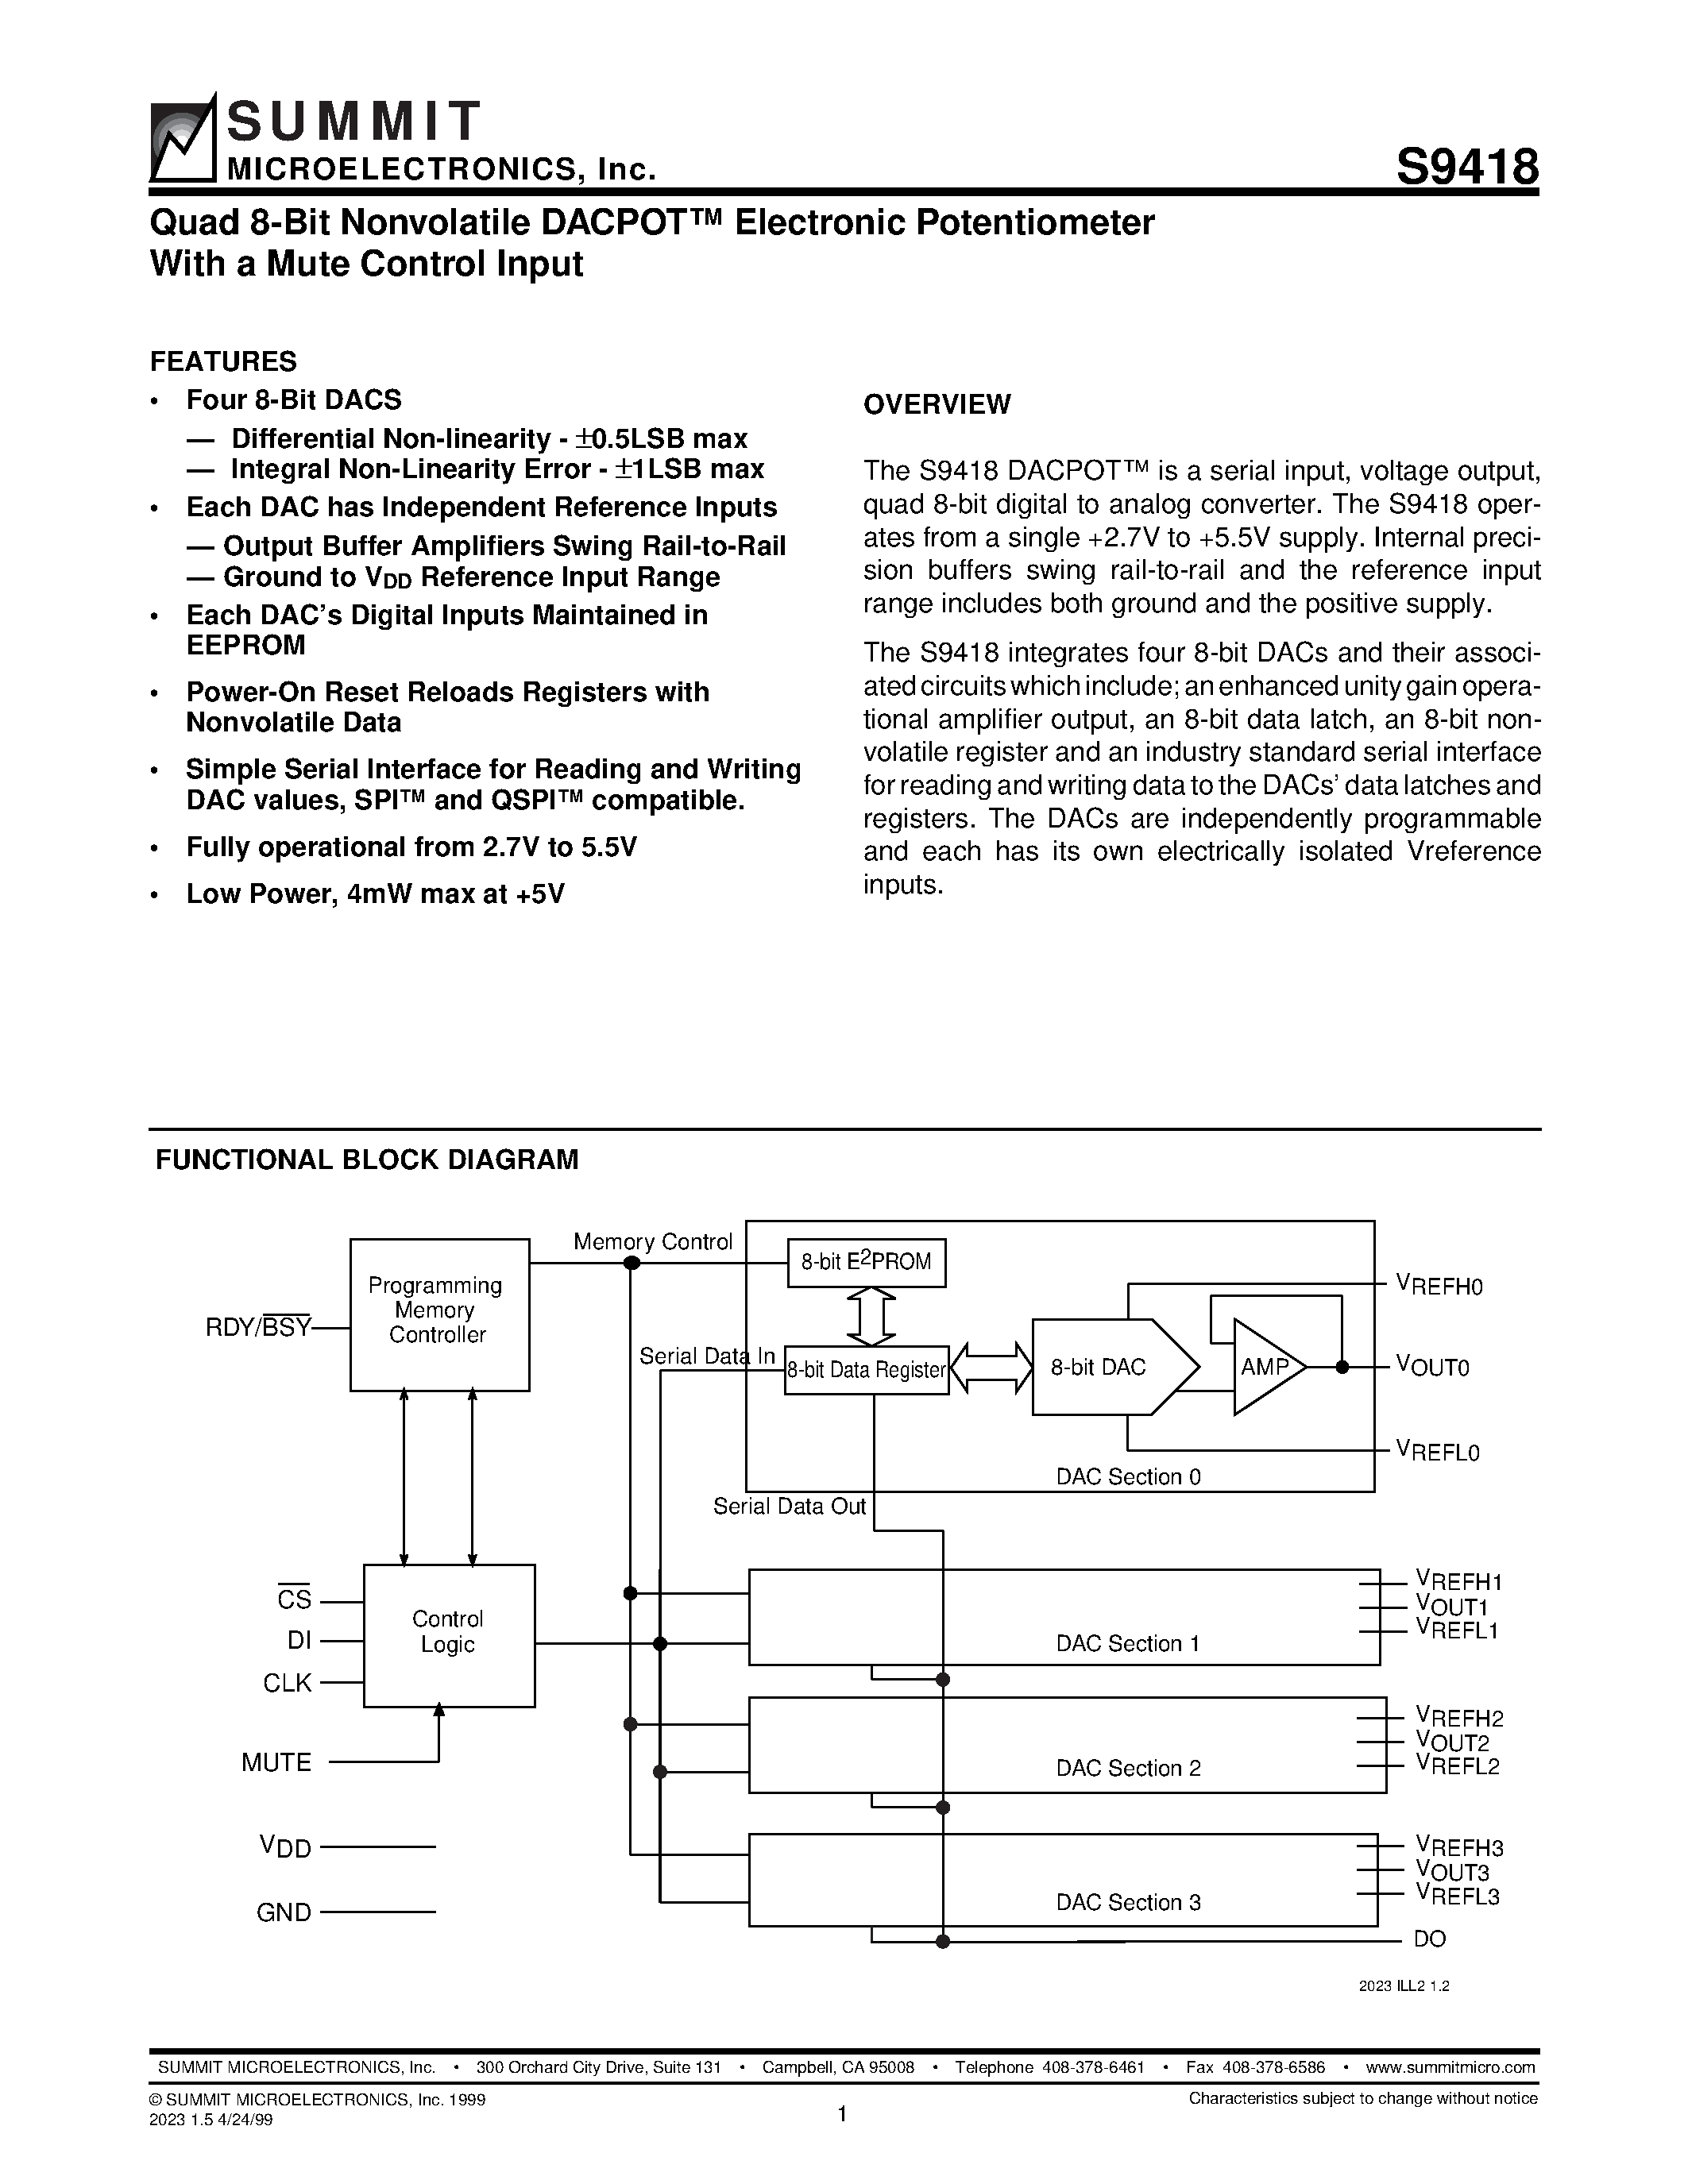 Datasheet S9418 - Quad 8-Bit Nonvolatile DACPOT Electronic Potentiometer With a Mute Control Input page 1